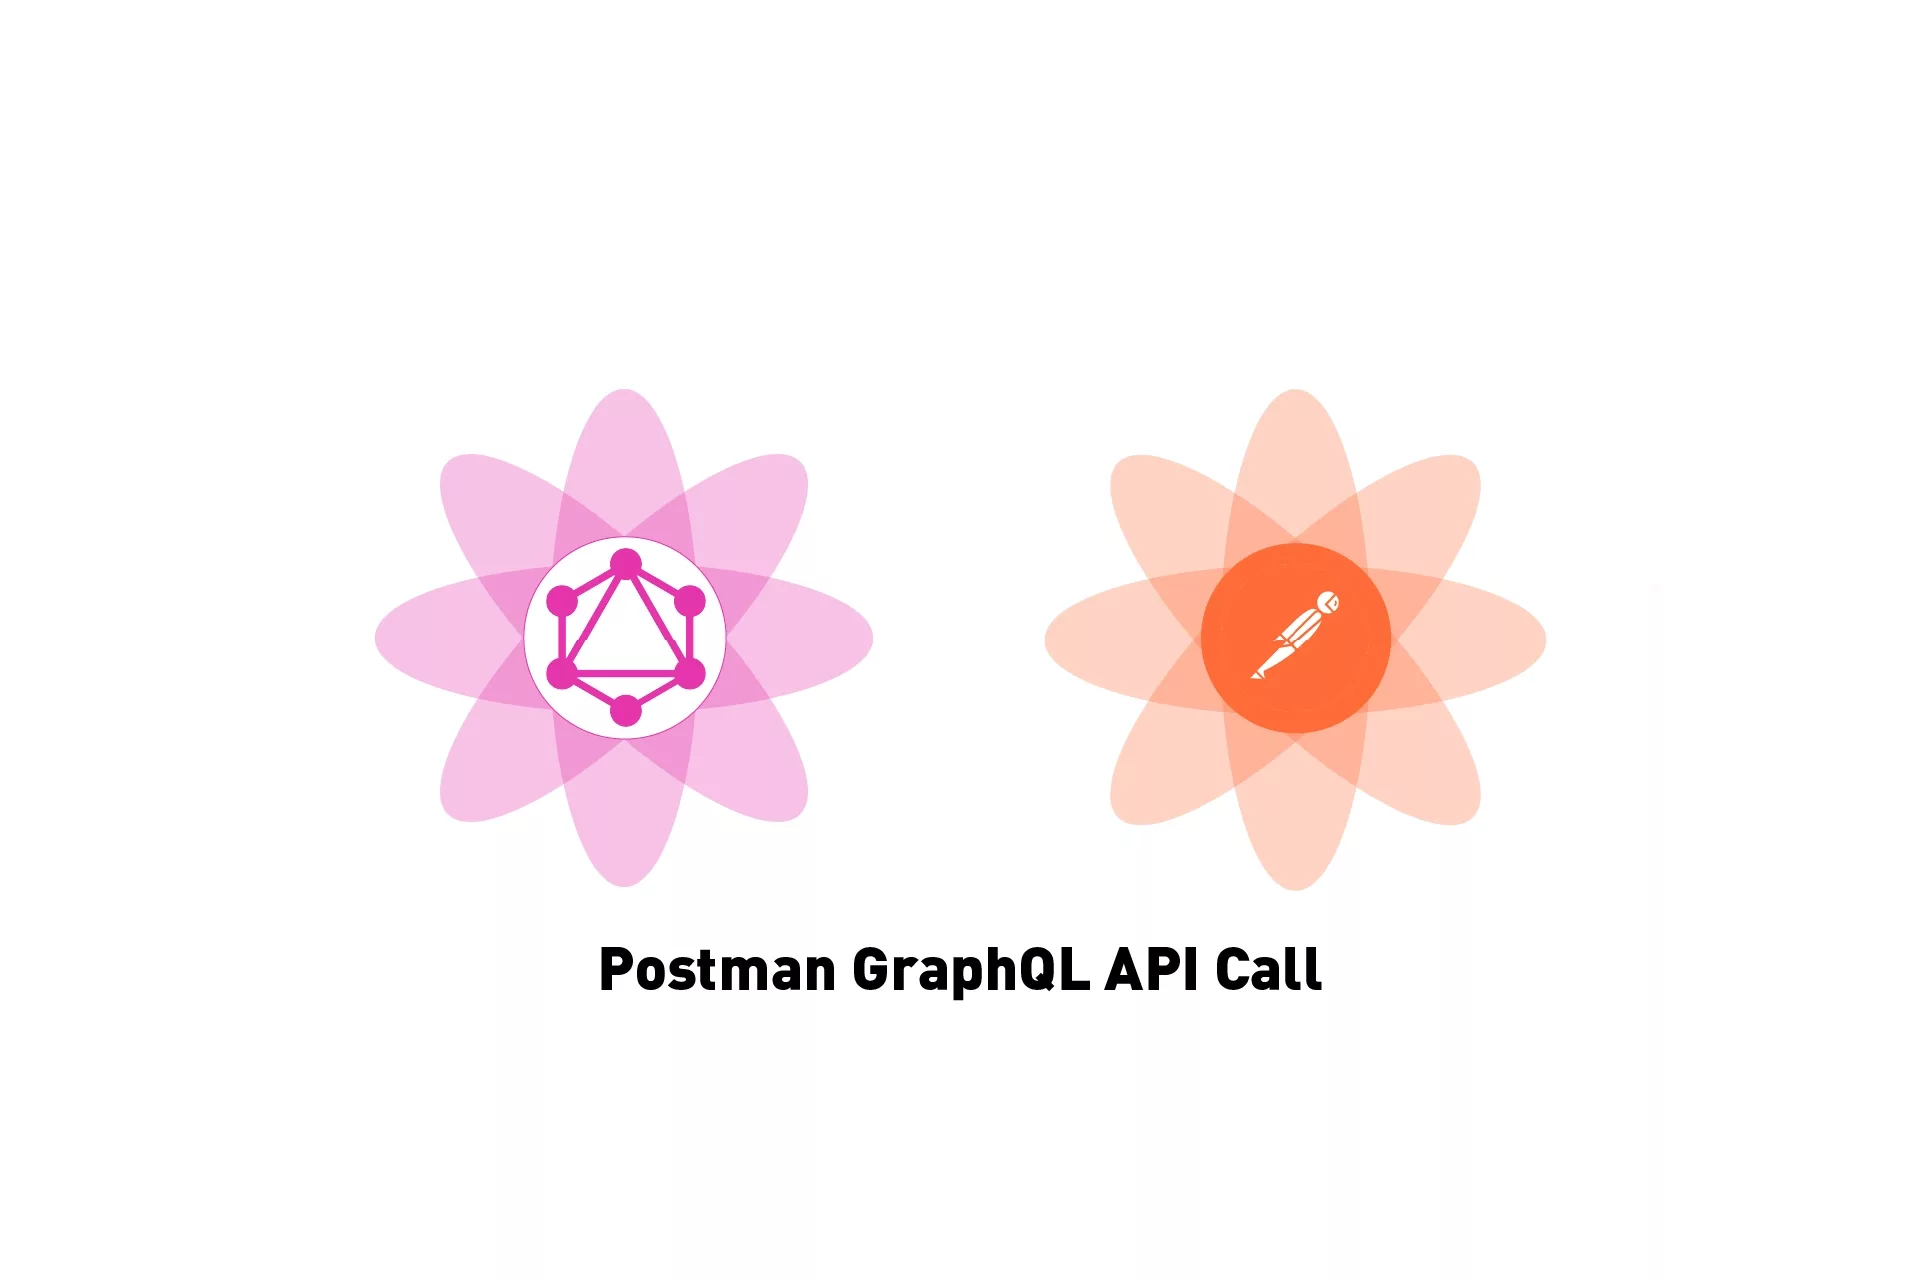 A flower that represents GraphQL next to a flower that represents Postman. Beneath it sits the text that states 'Postman GraphQL API Call'.